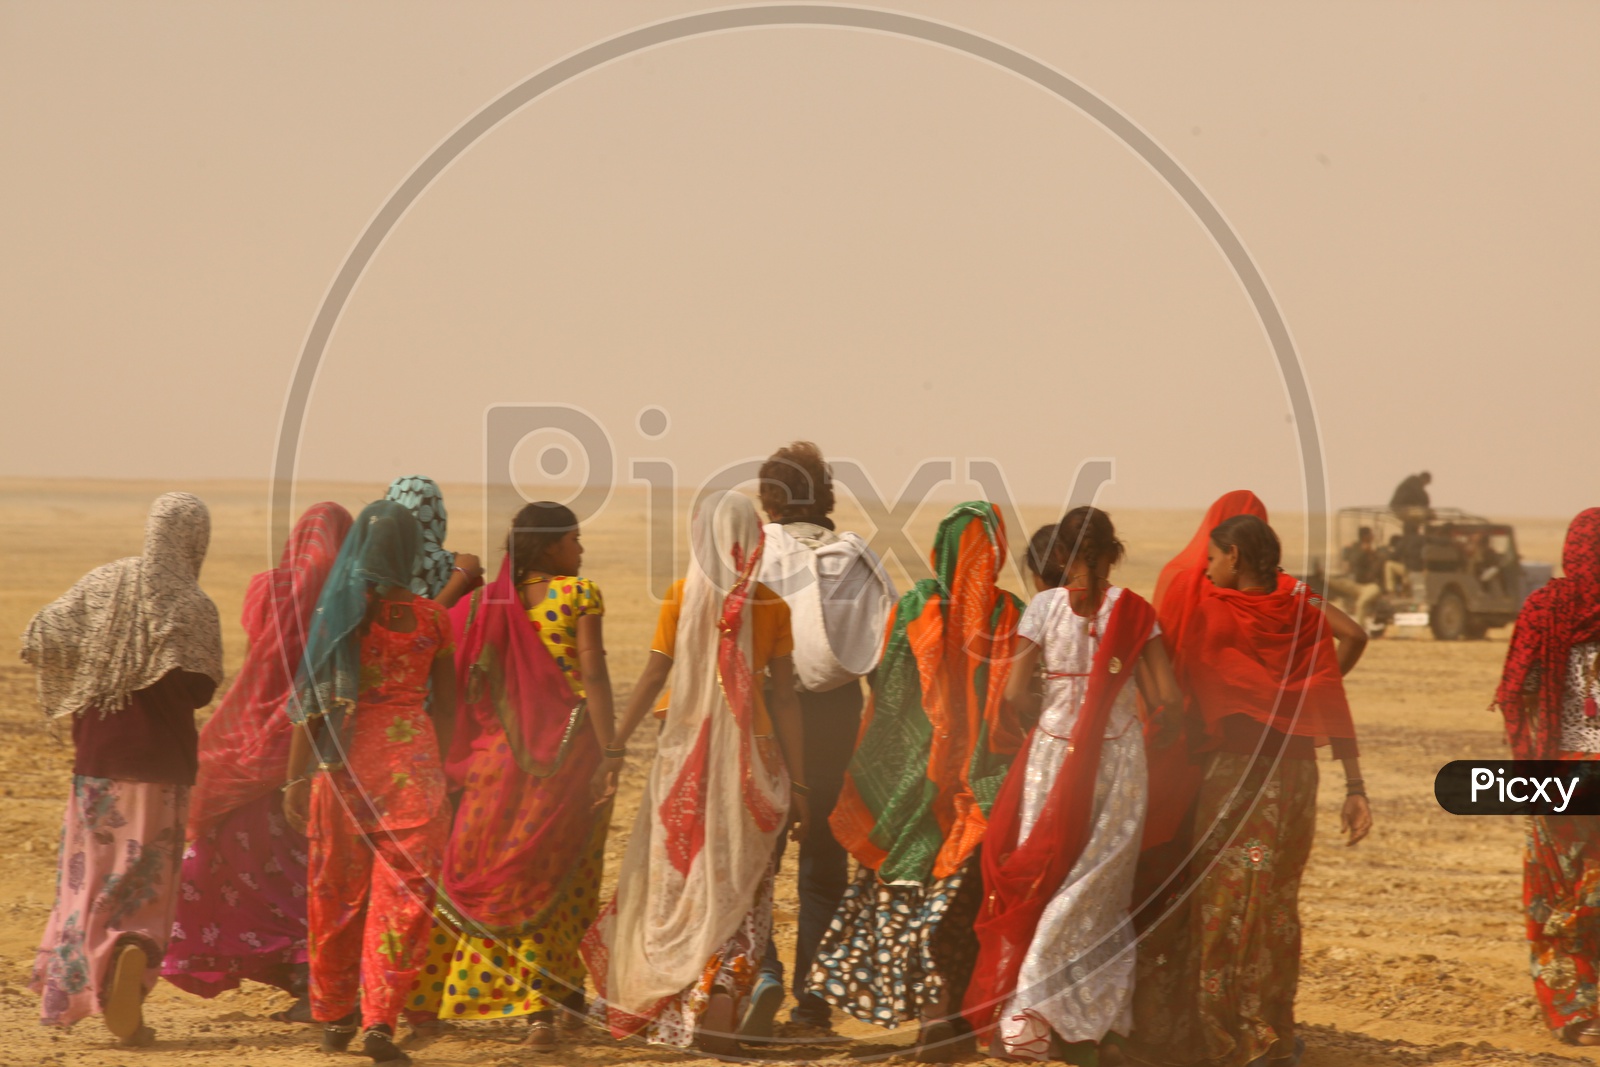 Rajasthani women following the man